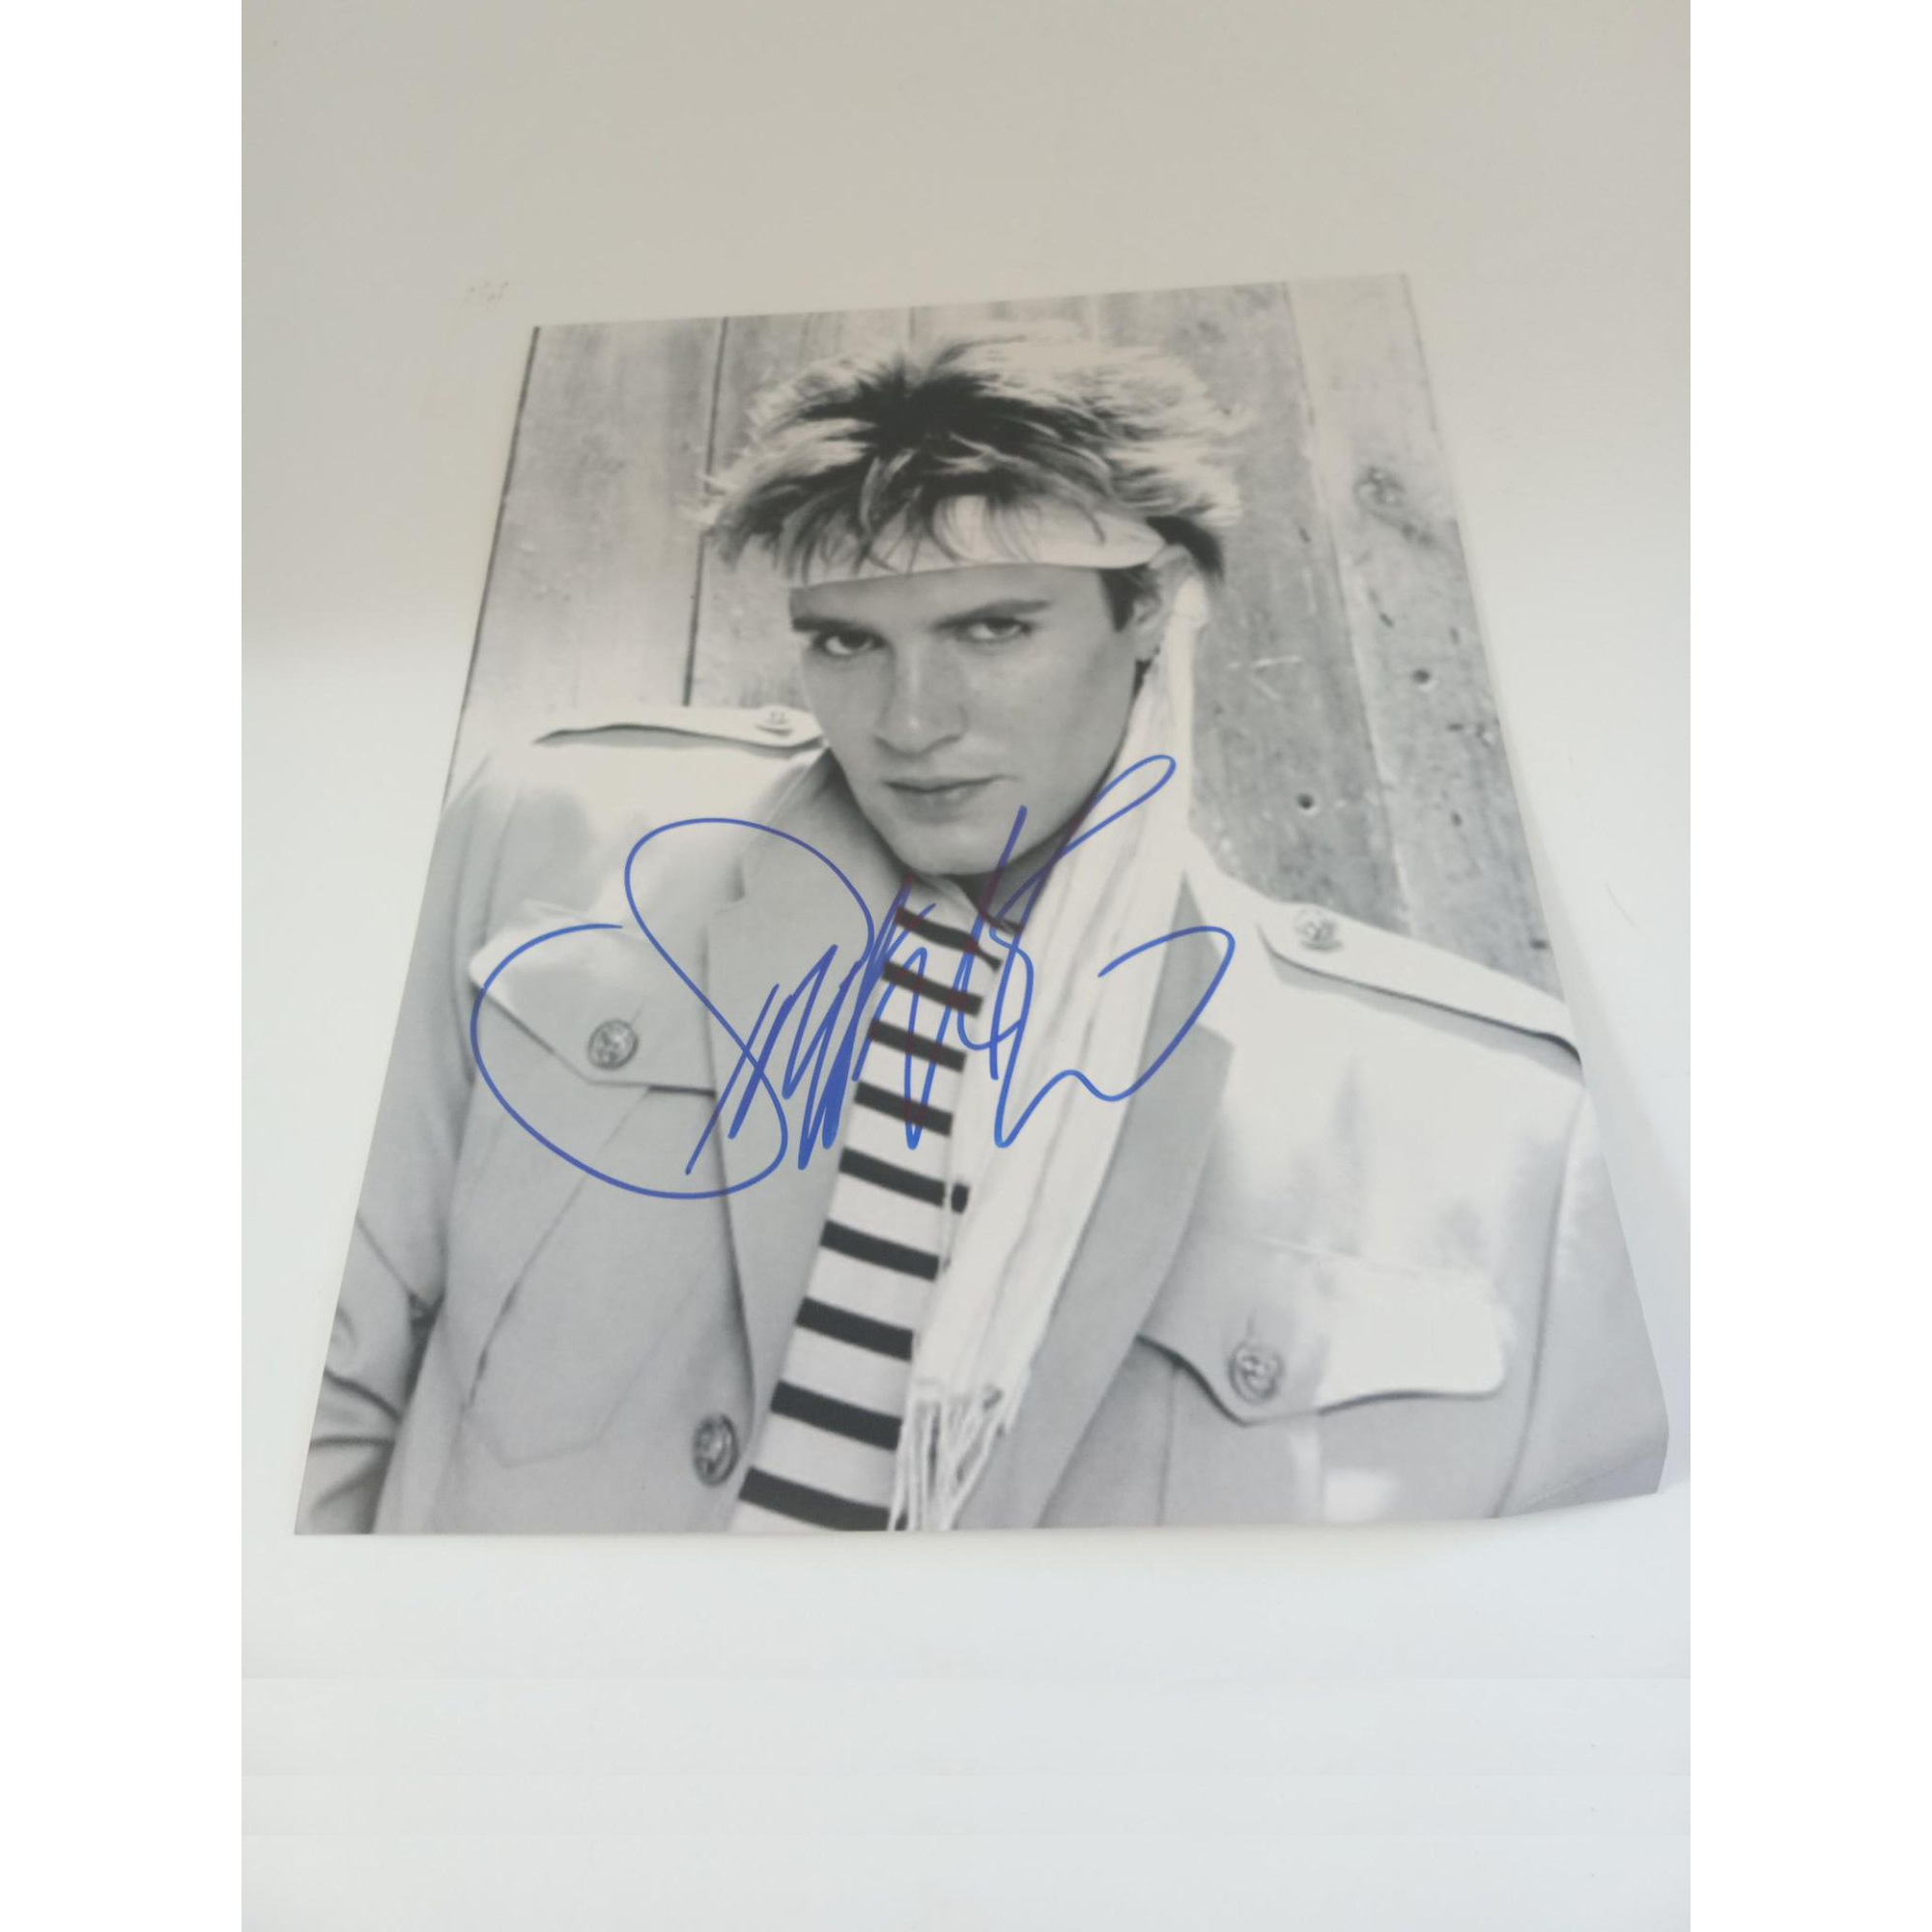 Simon LeBonn Duran Duran 8x10 photo signed with proof